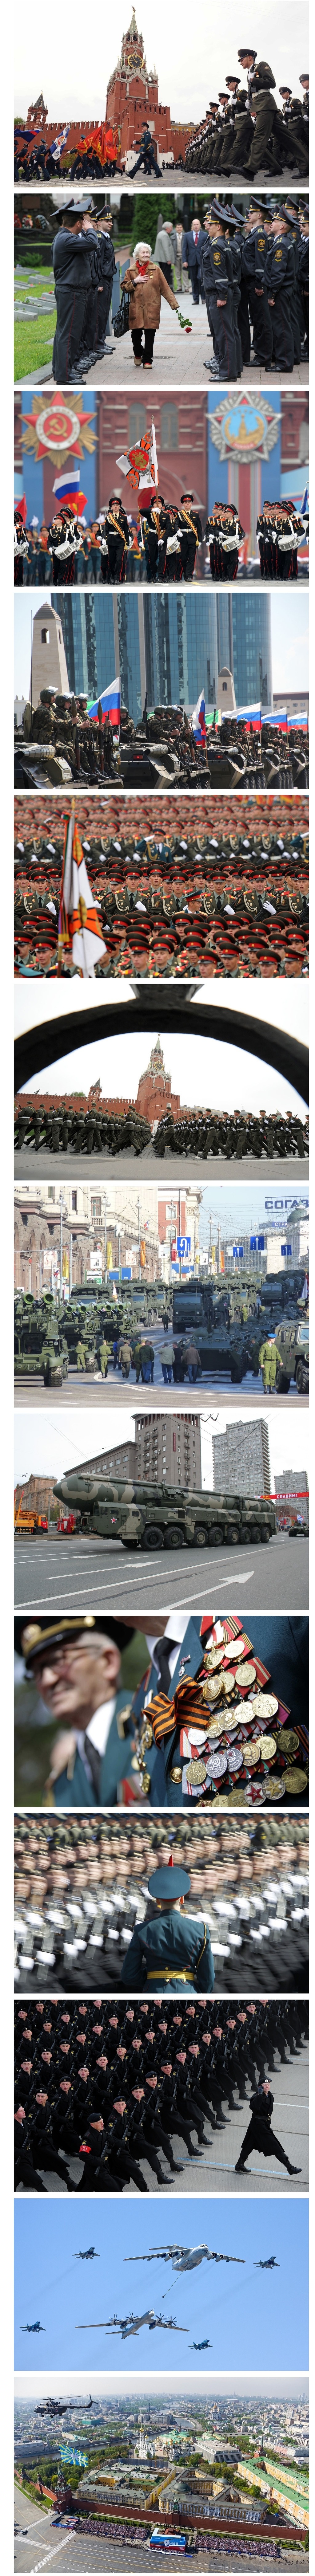 3.jpg : 러시아 군대의 위엄.jpg